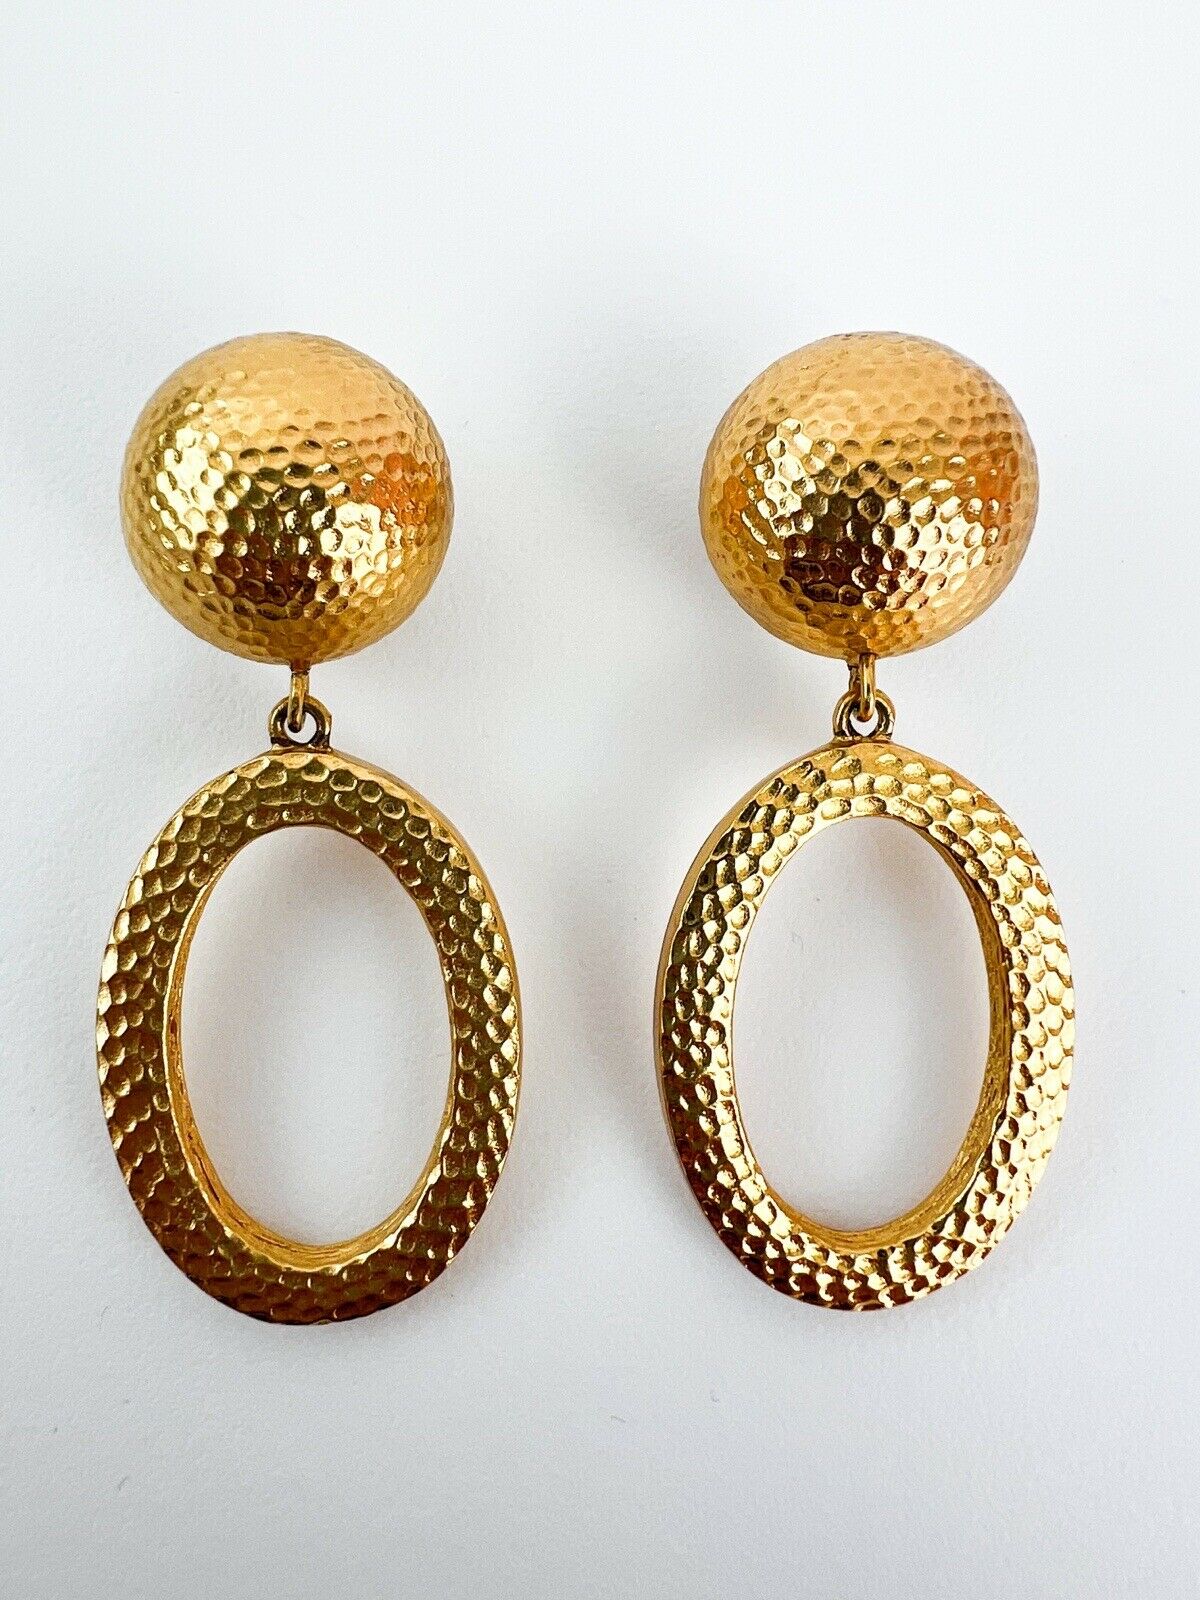 Vintage Christian Dior oval earrings